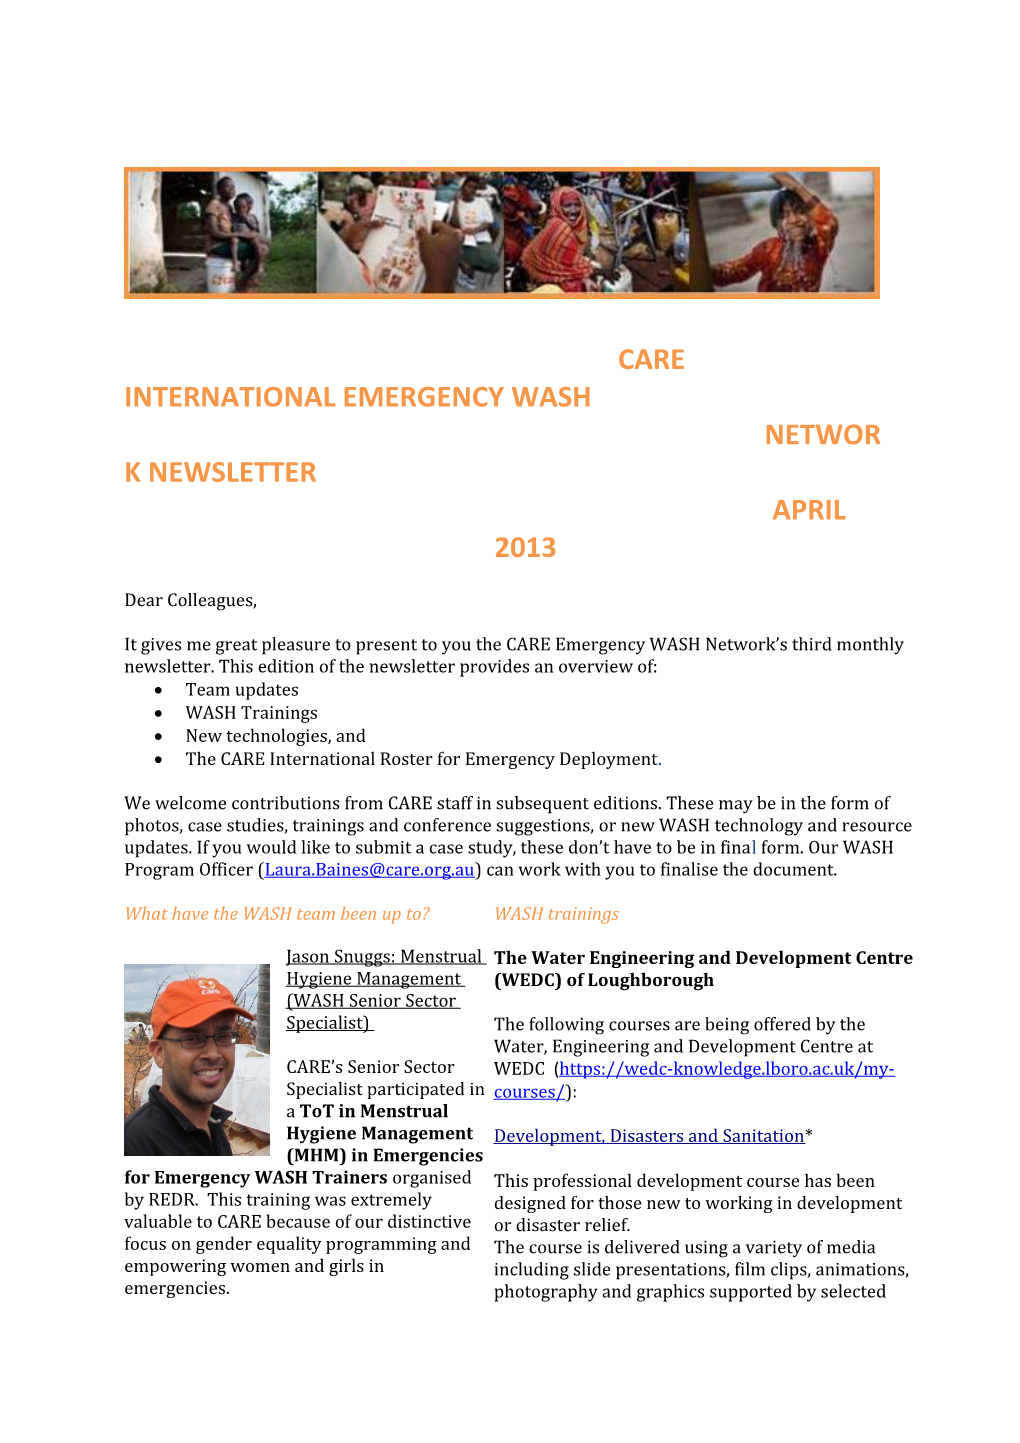 Care International Emergency Wash